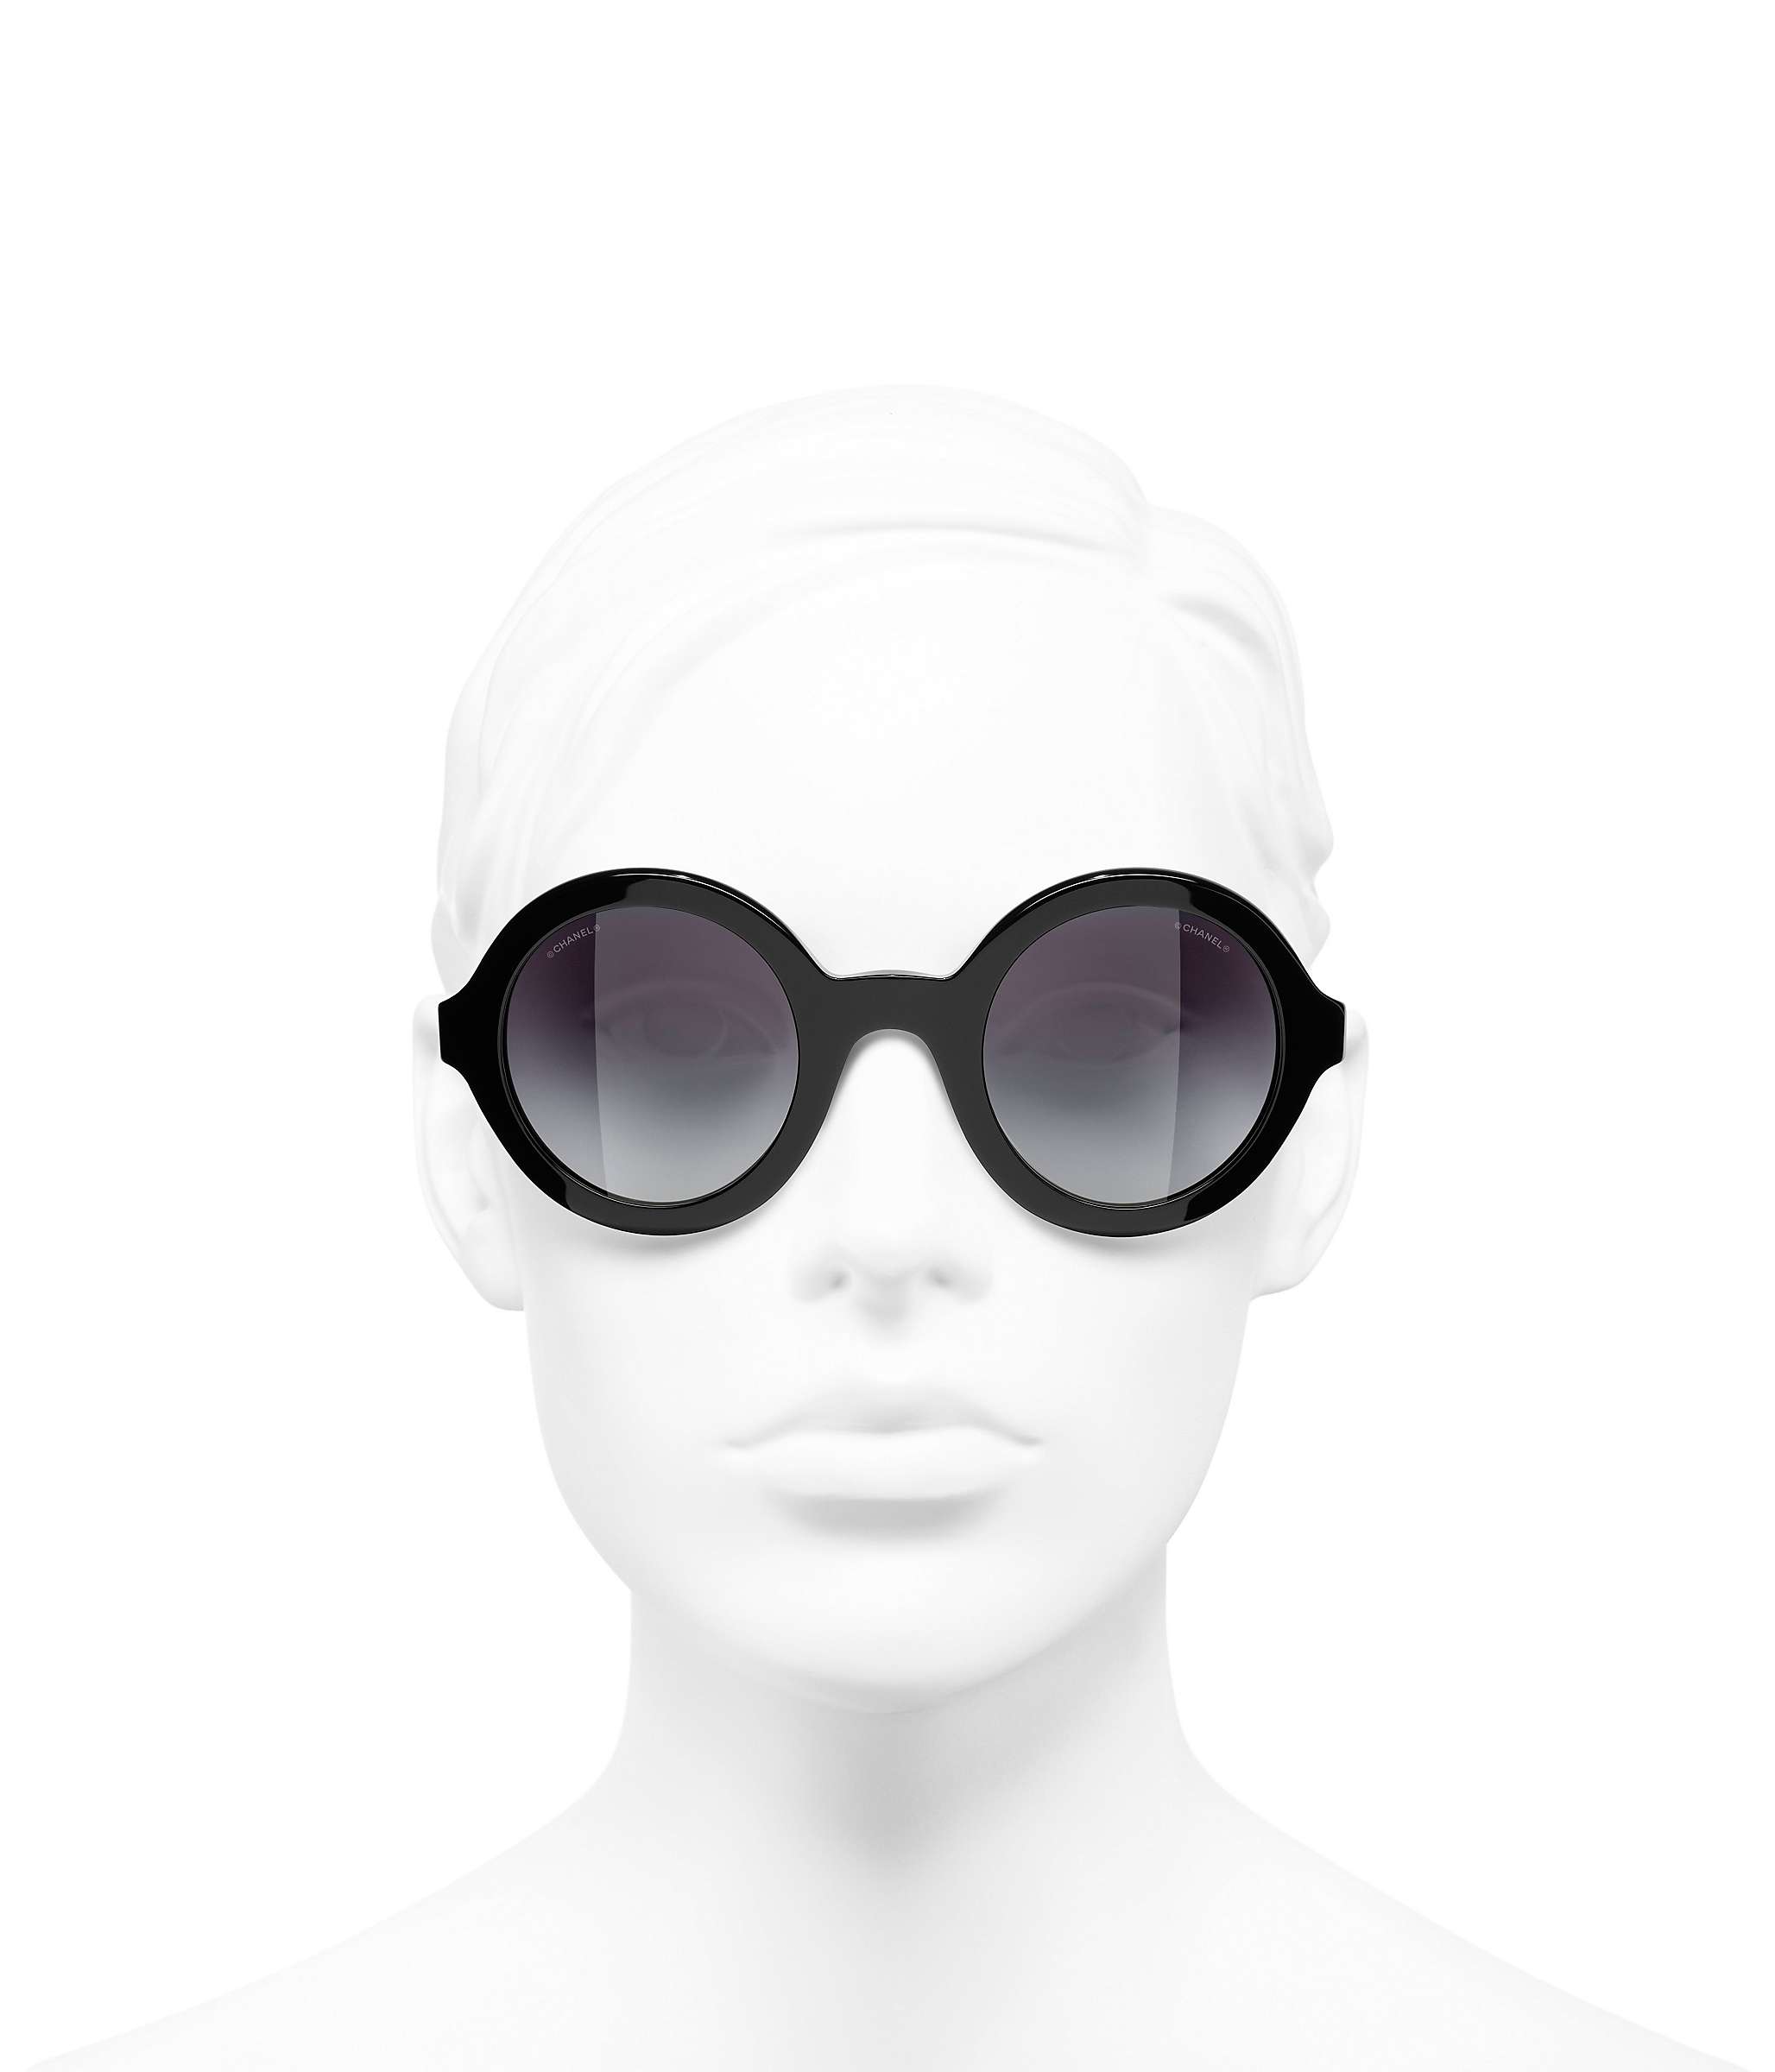 Buy CHANEL Round Sunglasses CH5441 Black/Grey Gradient Online at johnlewis.com